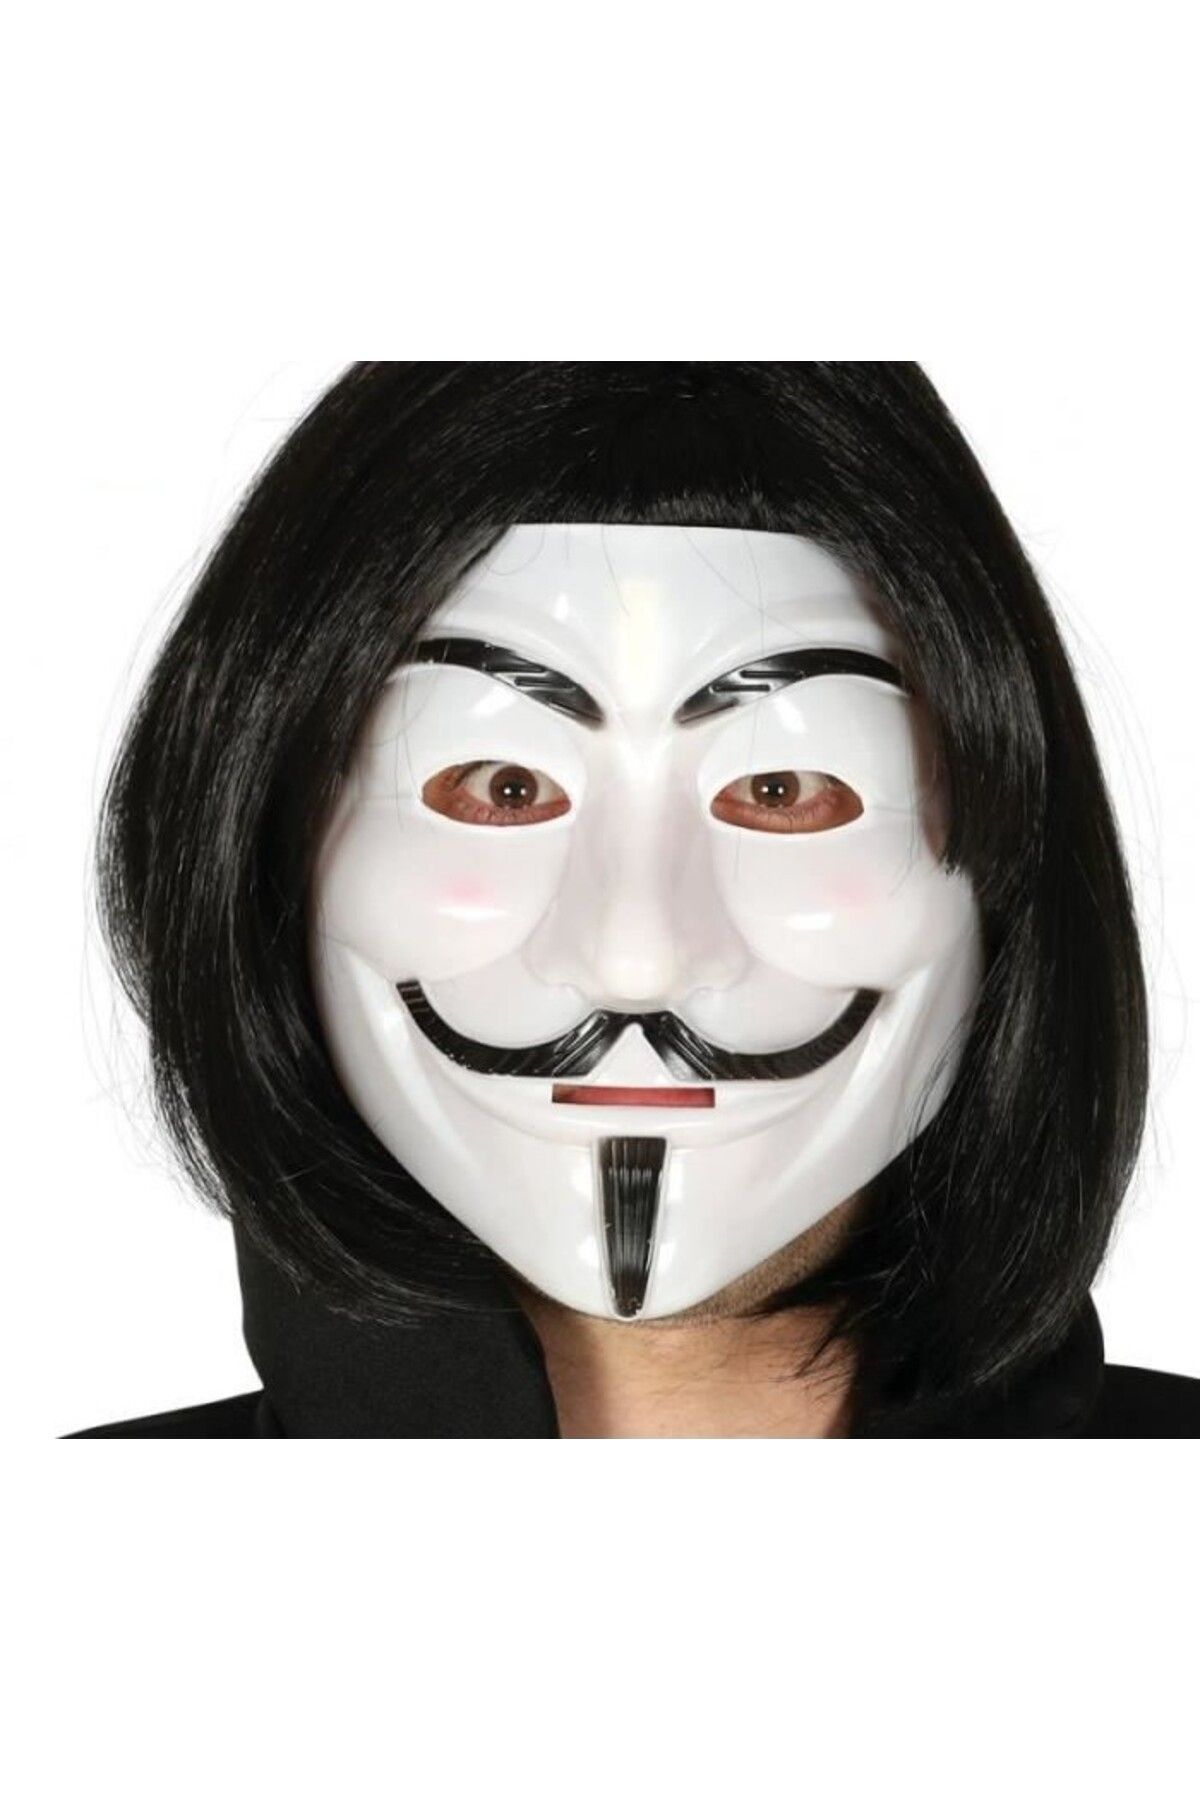 Go İthalat Siyah Renk Takma Kısa Saç ve V For Vendetta Maskesi Anonymous Maskesi (2818)